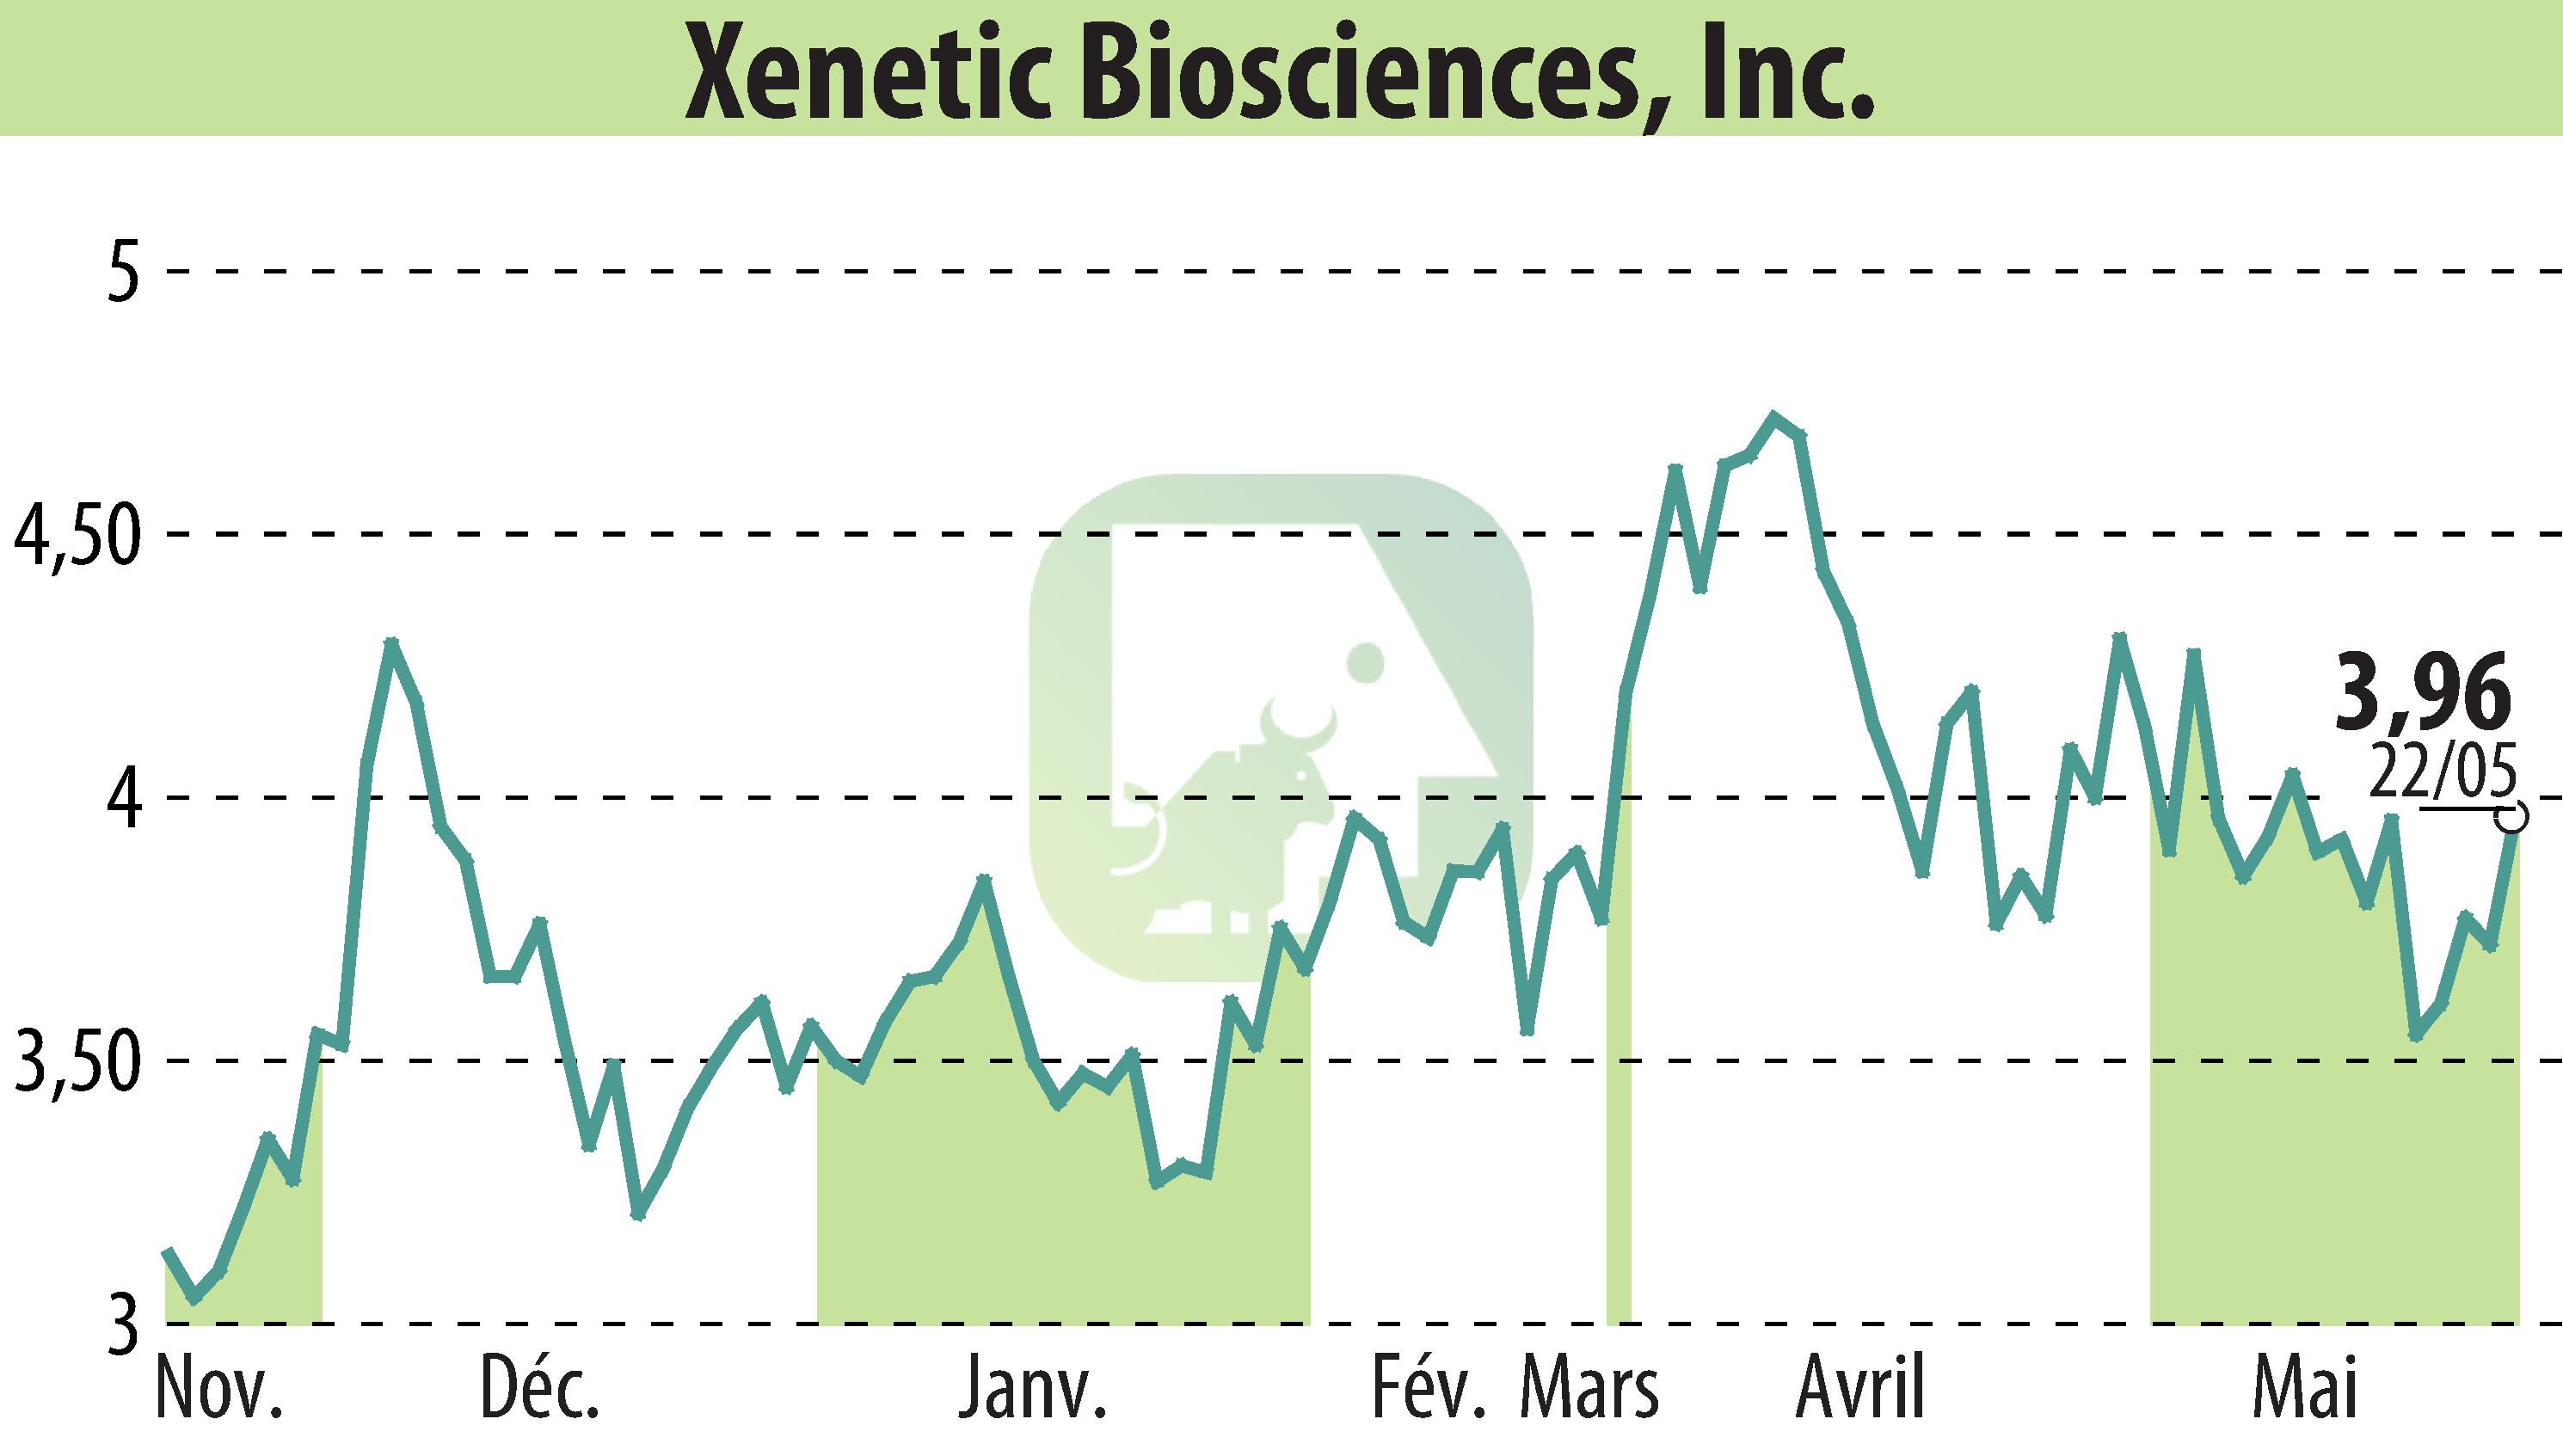 Stock price chart of Xenetic Biosciences, Inc. (EBR:XBIO) showing fluctuations.